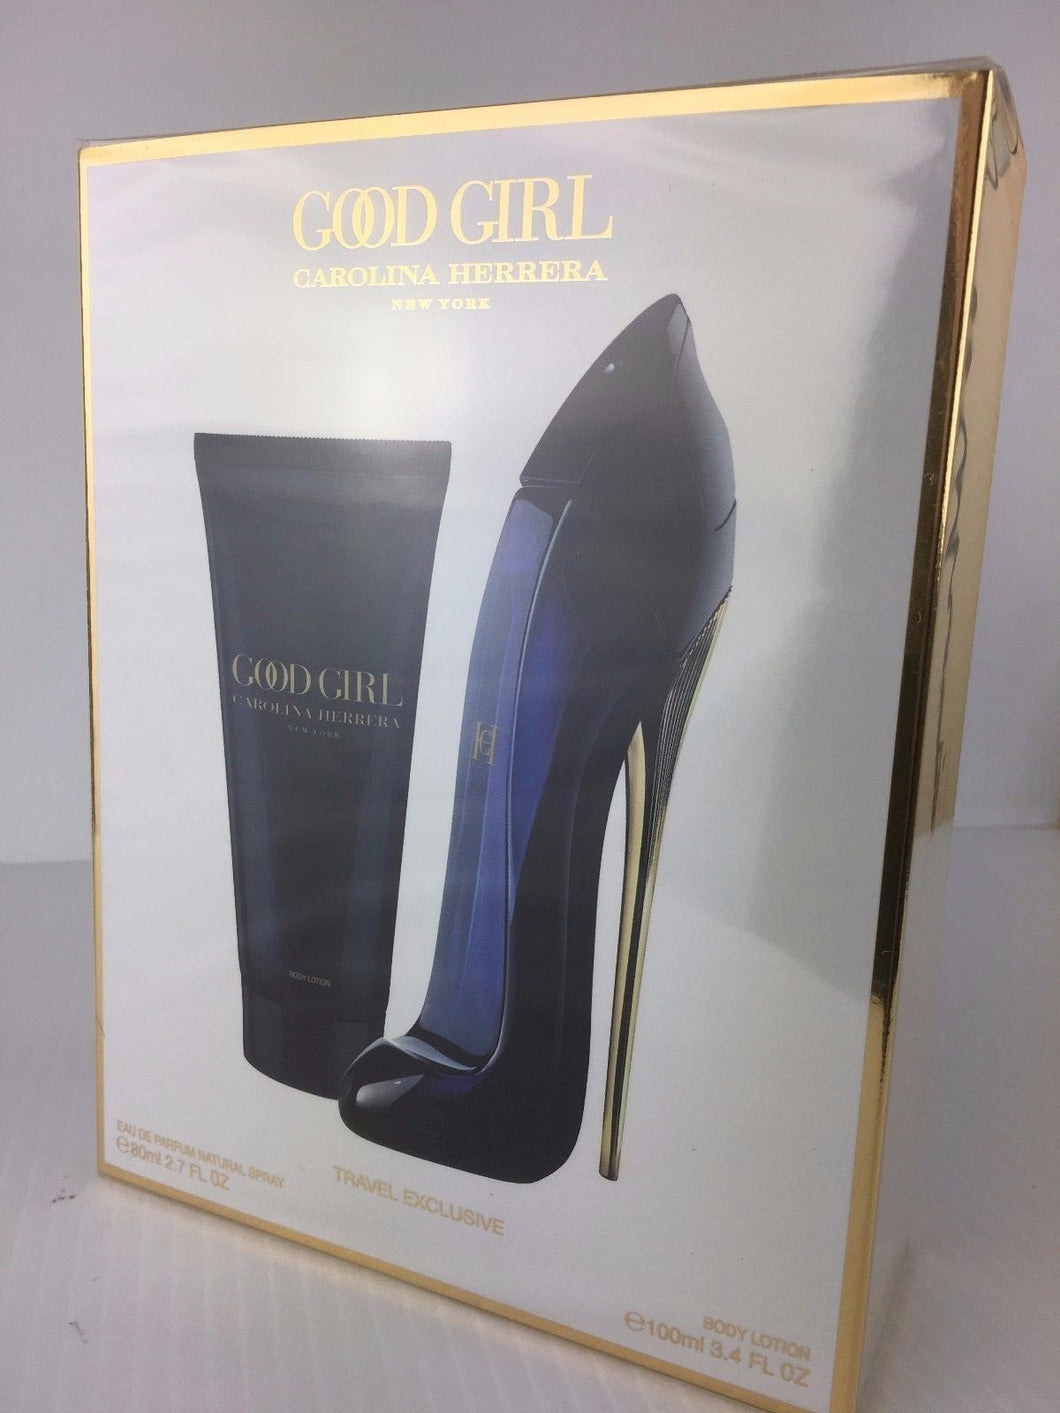 GOOD GIRL CAROLINA HERRERA 2PC SET PERFUME SPRAY 2.7 OZ LOTION 3.4 OZ SEALED BOX - Perfume Gallery